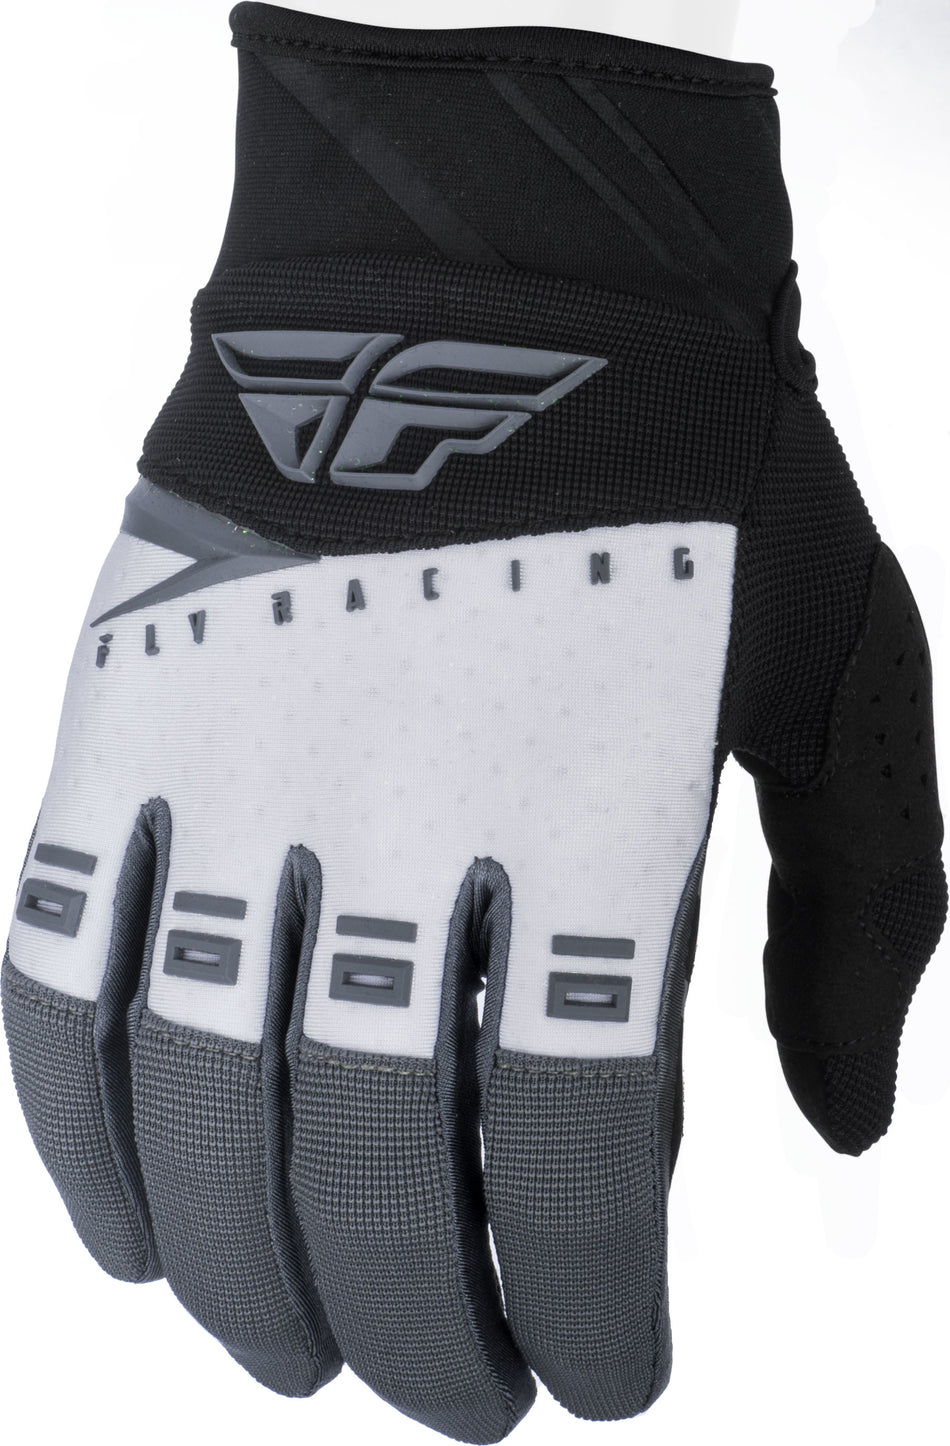 FLY RACING F-16 Gloves Black/White/Grey Sz 07 372-91007